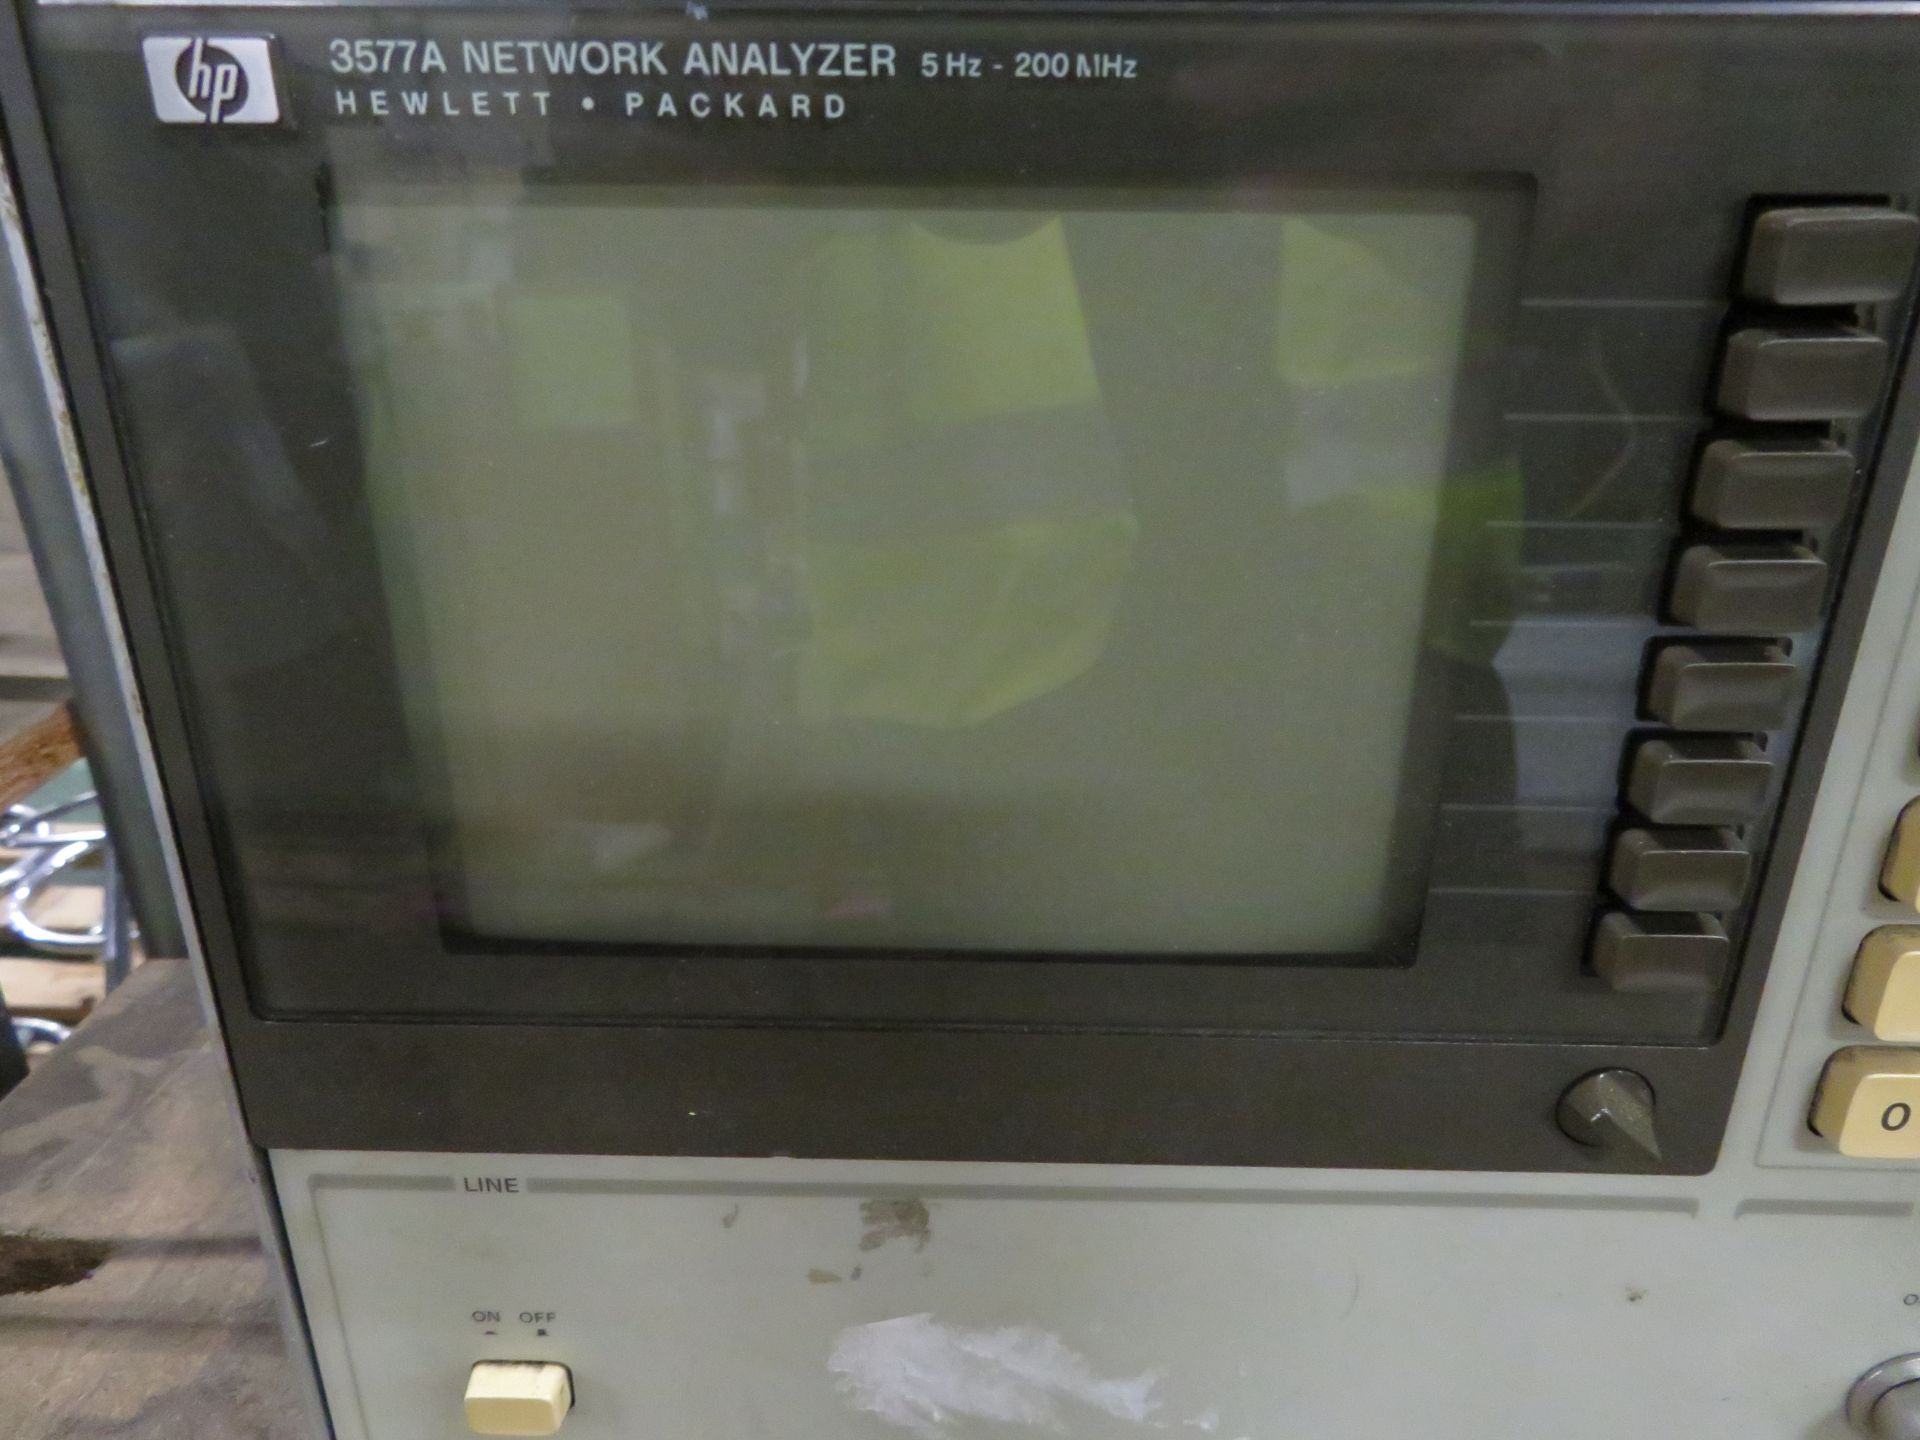 HP Network analyzer 5Hz - 200kHz - Image 2 of 4